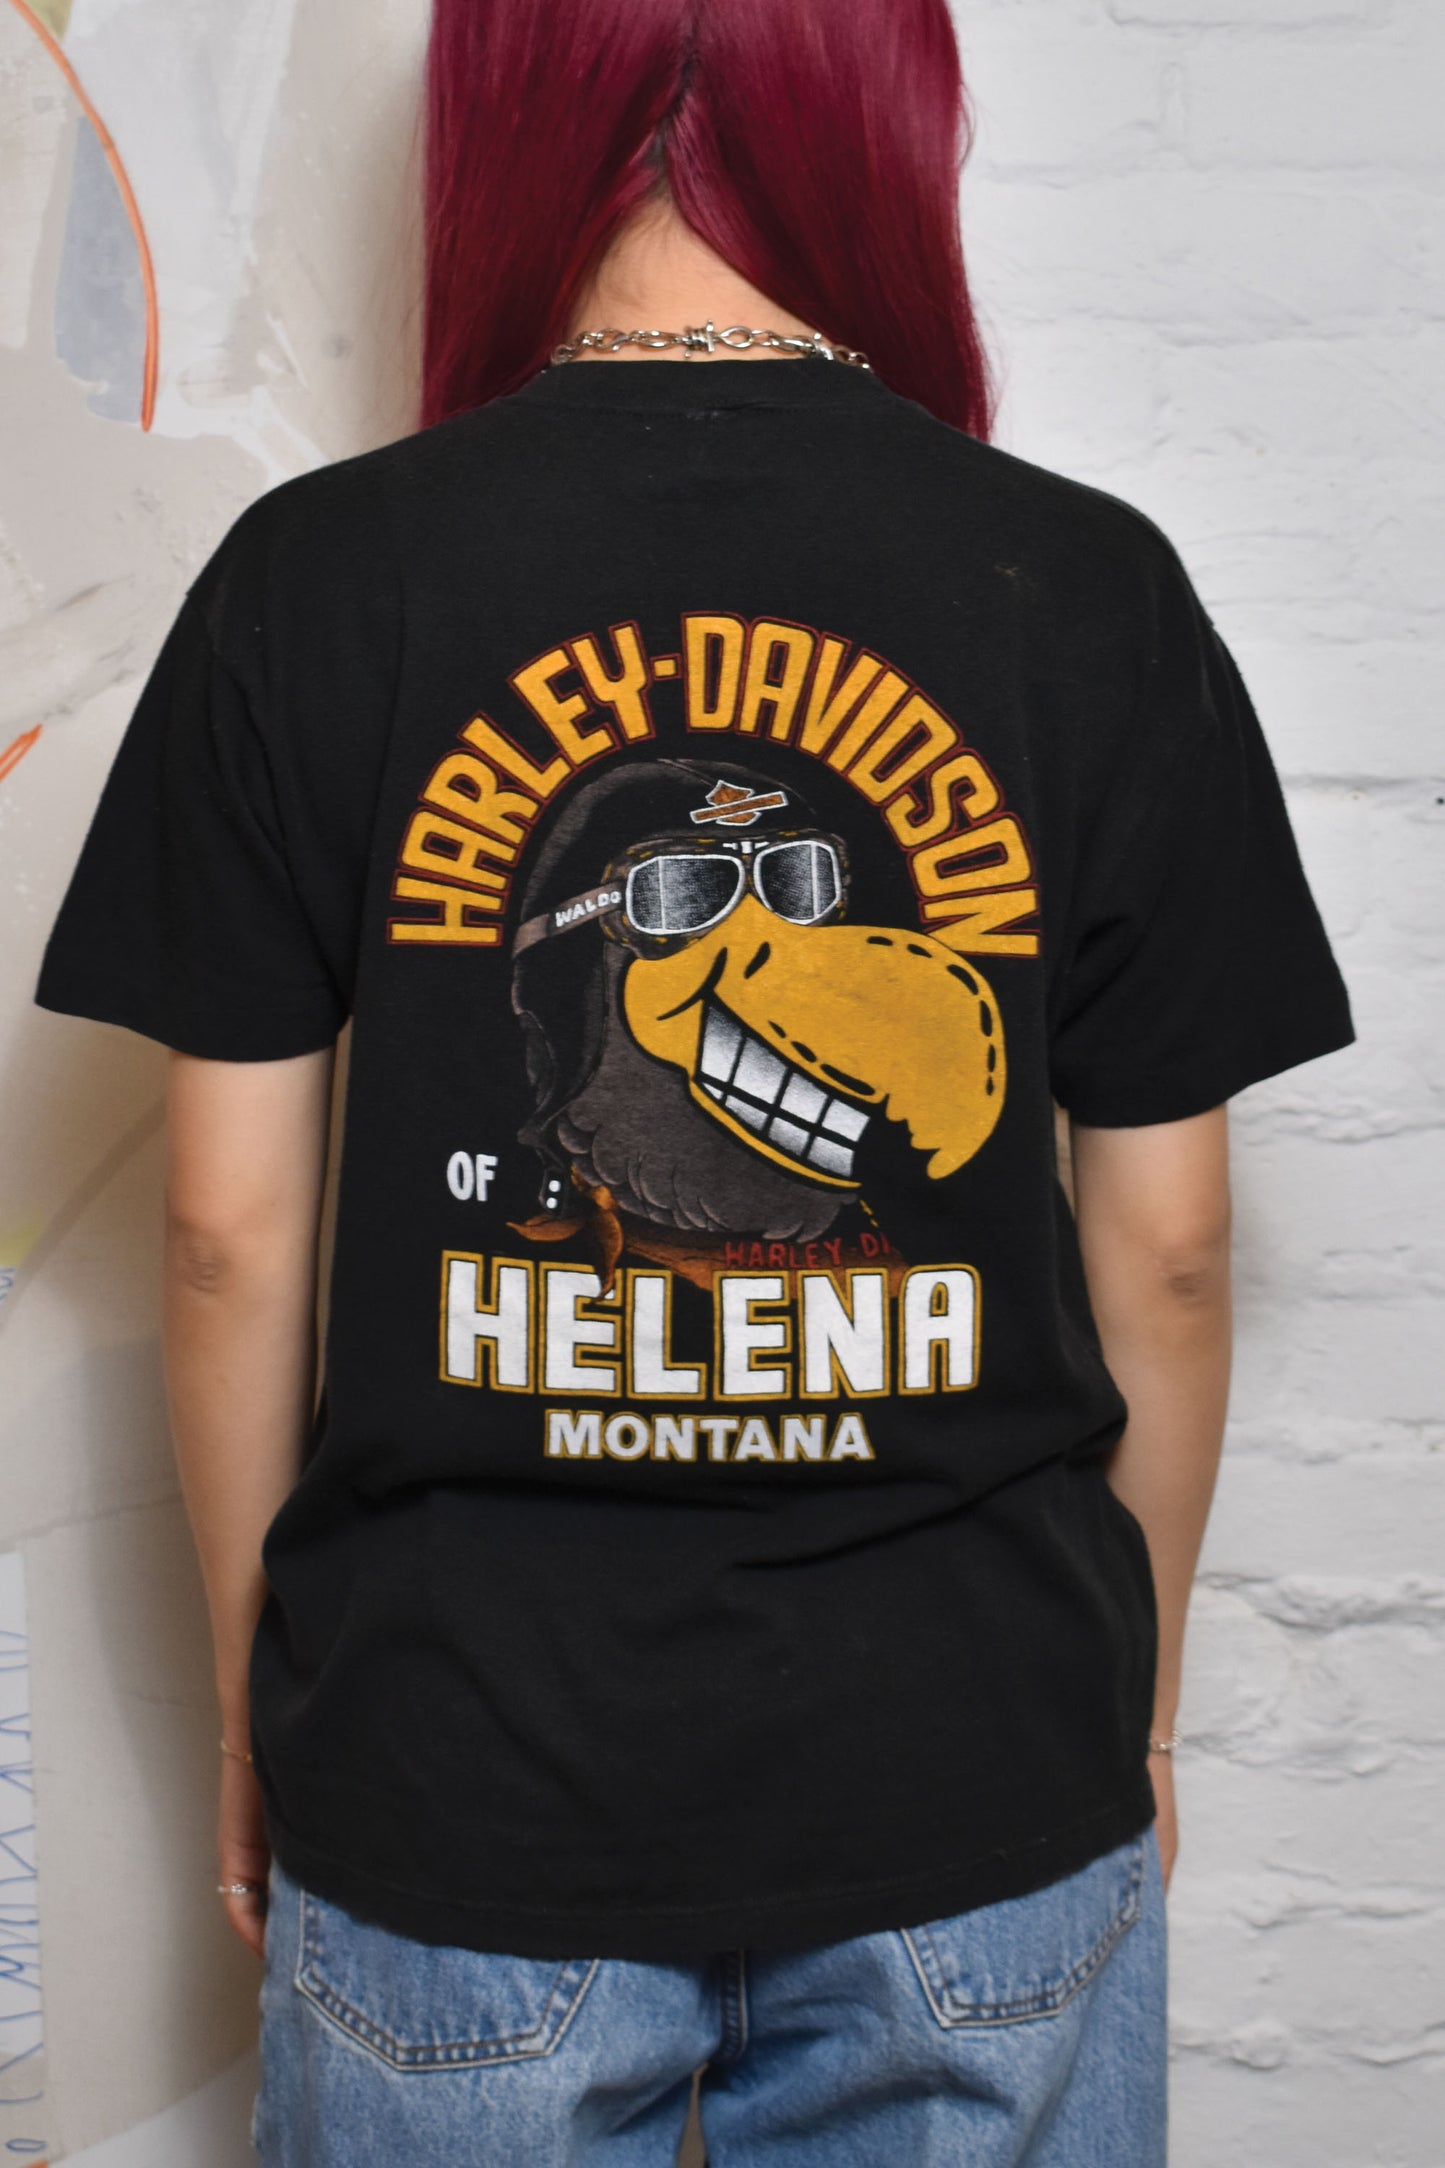 Vintage 80s "Harley Davidson" Takin' Pride In What You Ride! T-shirt